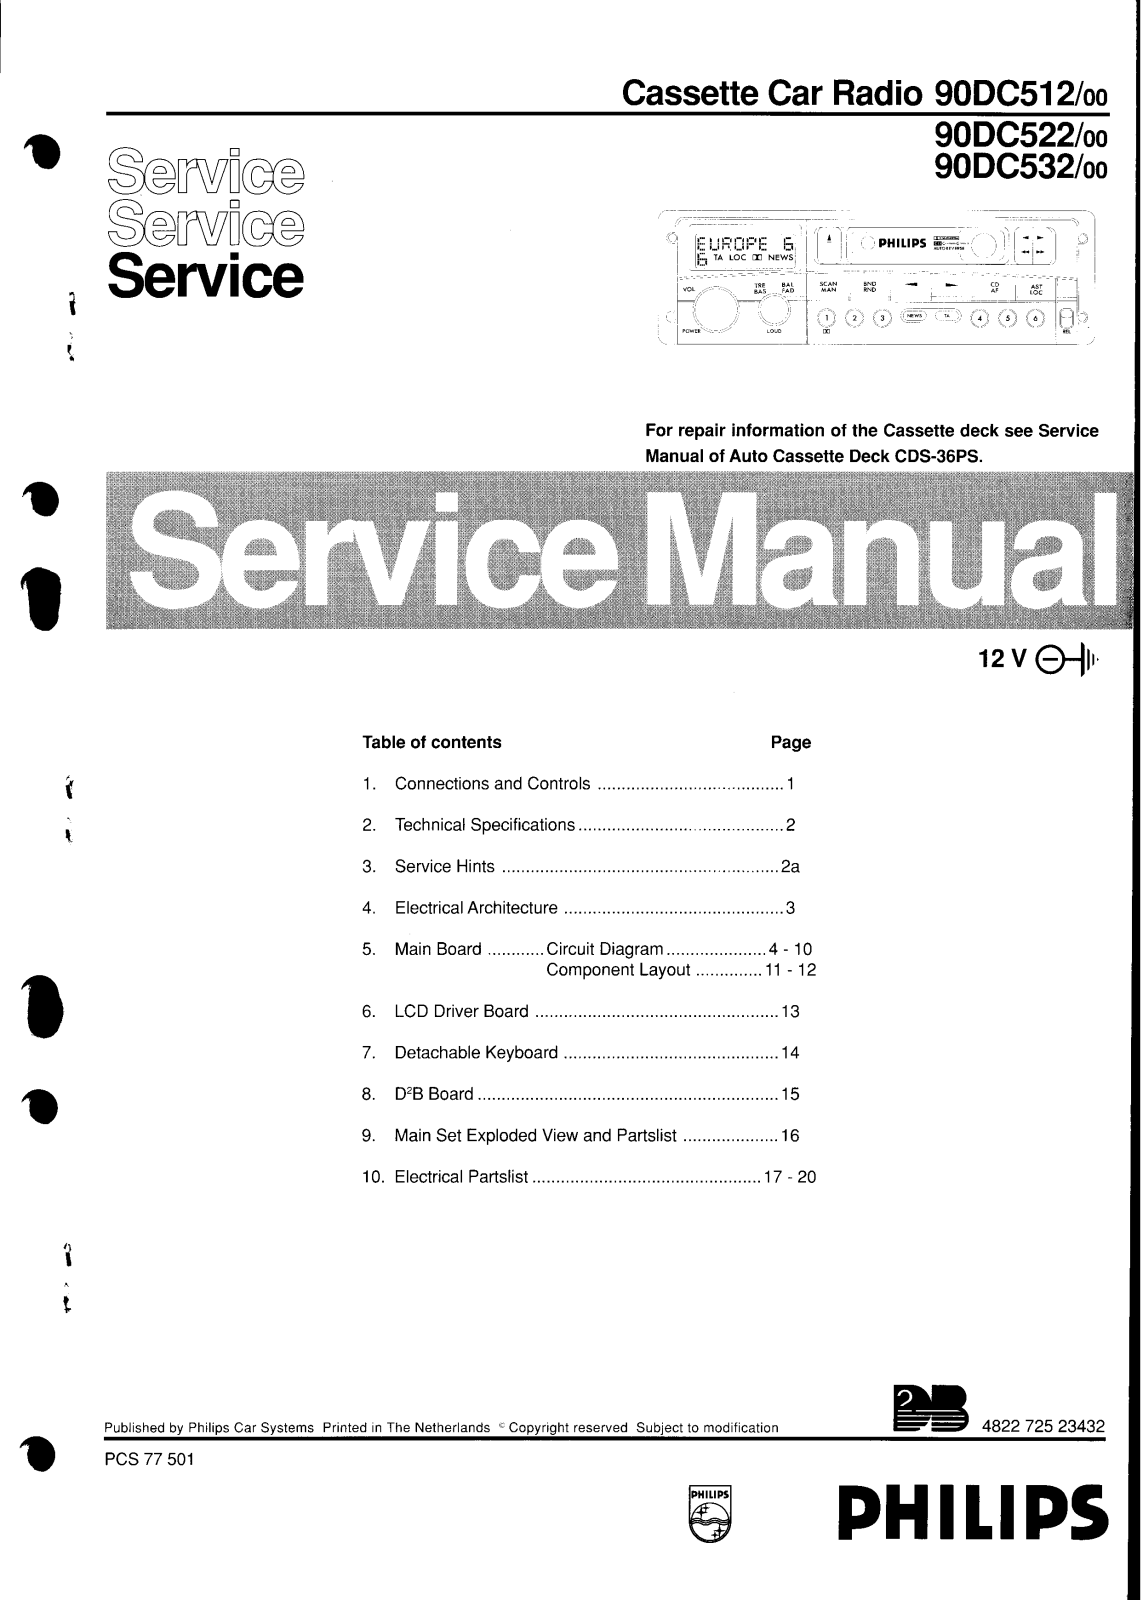 Philips 90-DC-512, 90-DC-532, 90-DC-522 Service Manual